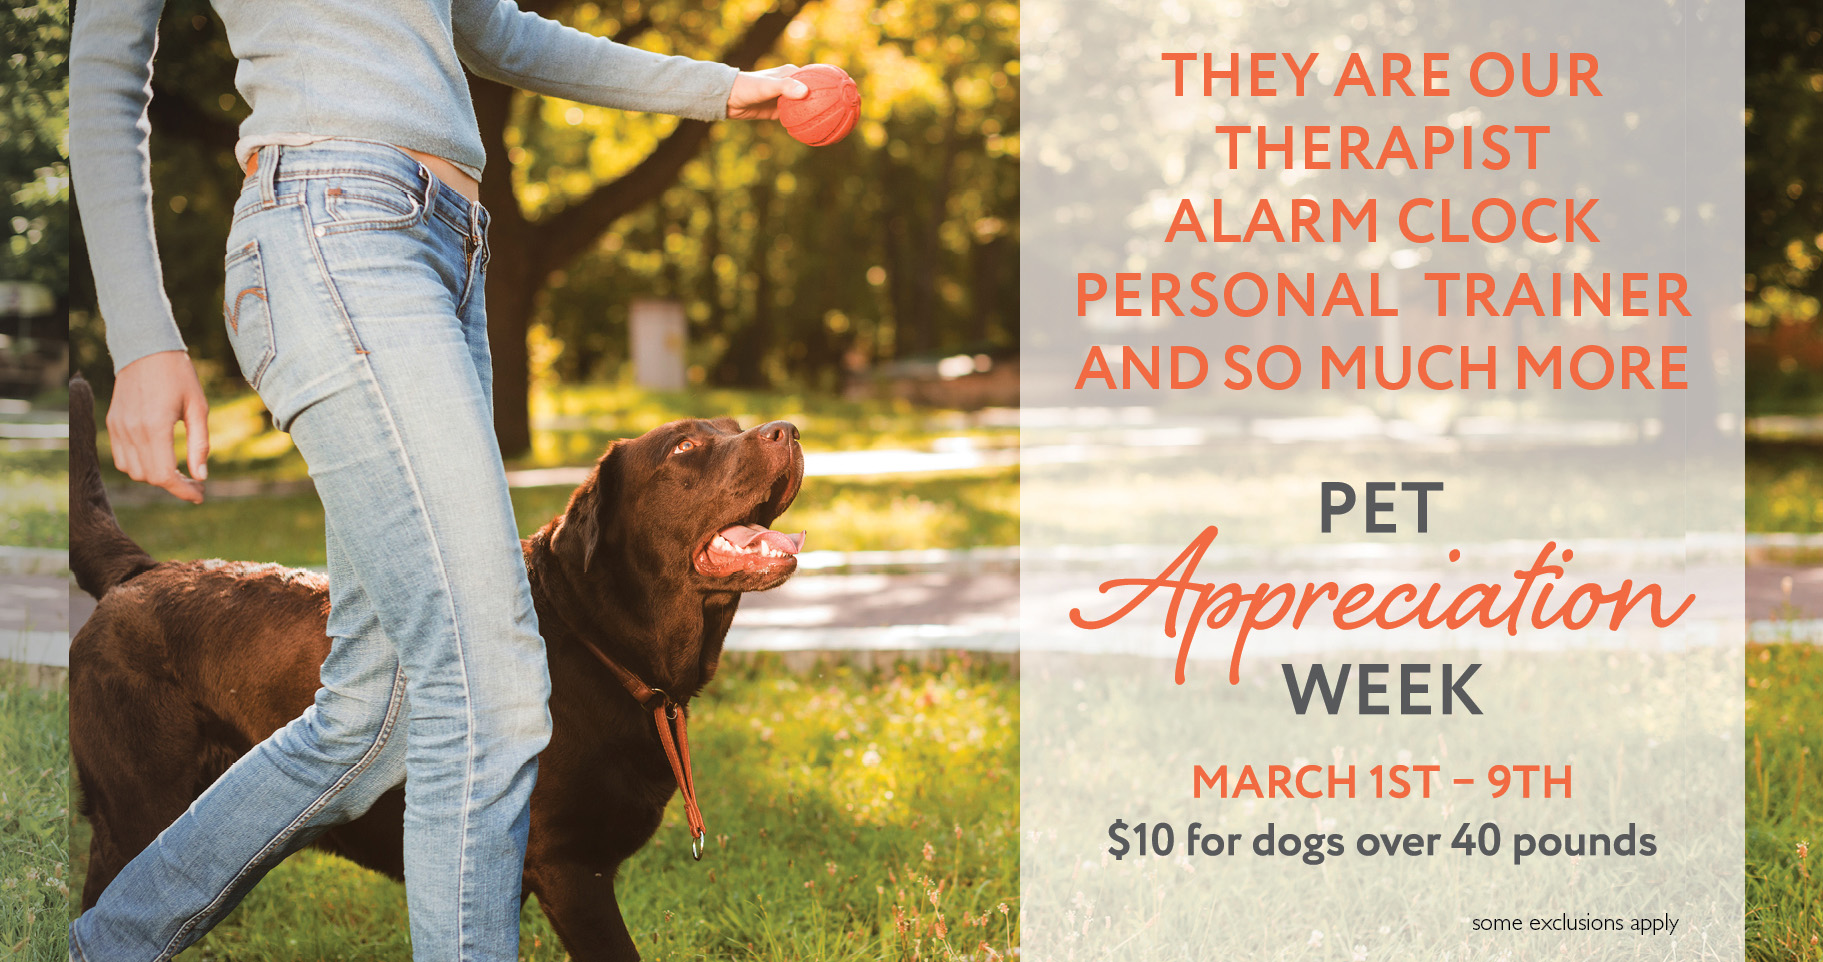 image of pet adoption ad